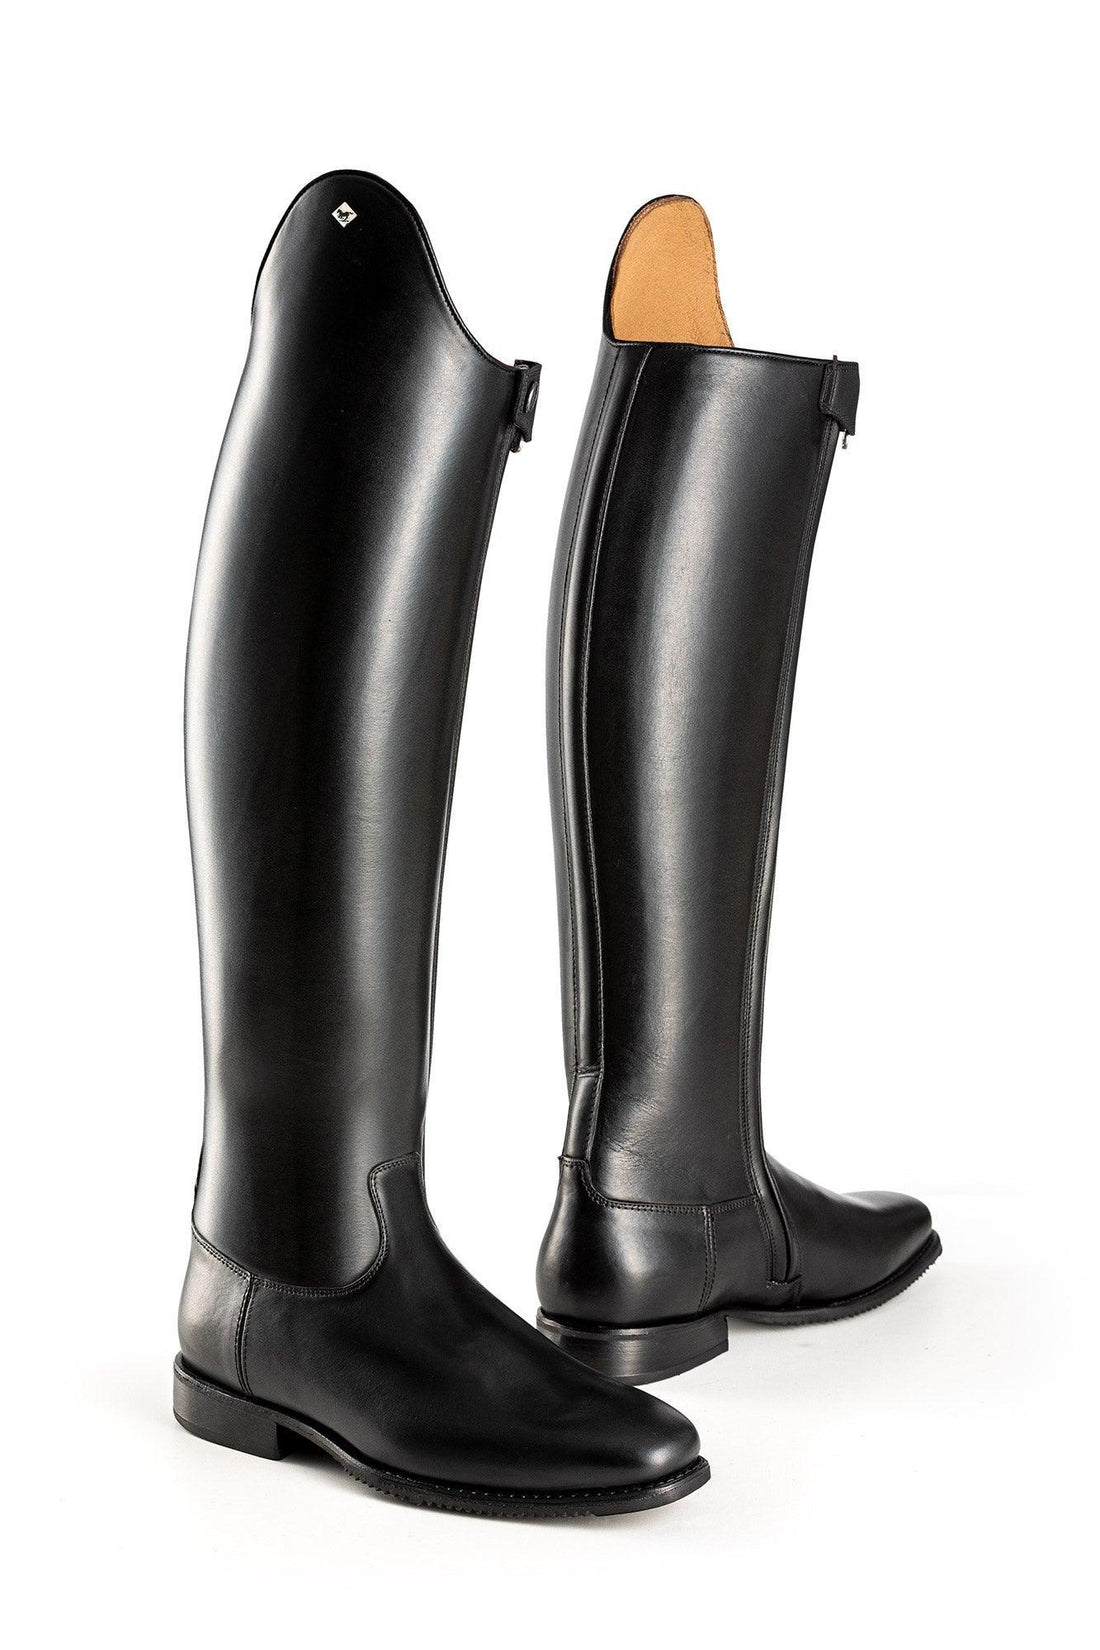 De Niro Michelangelo dressage boot - HorseworldEU